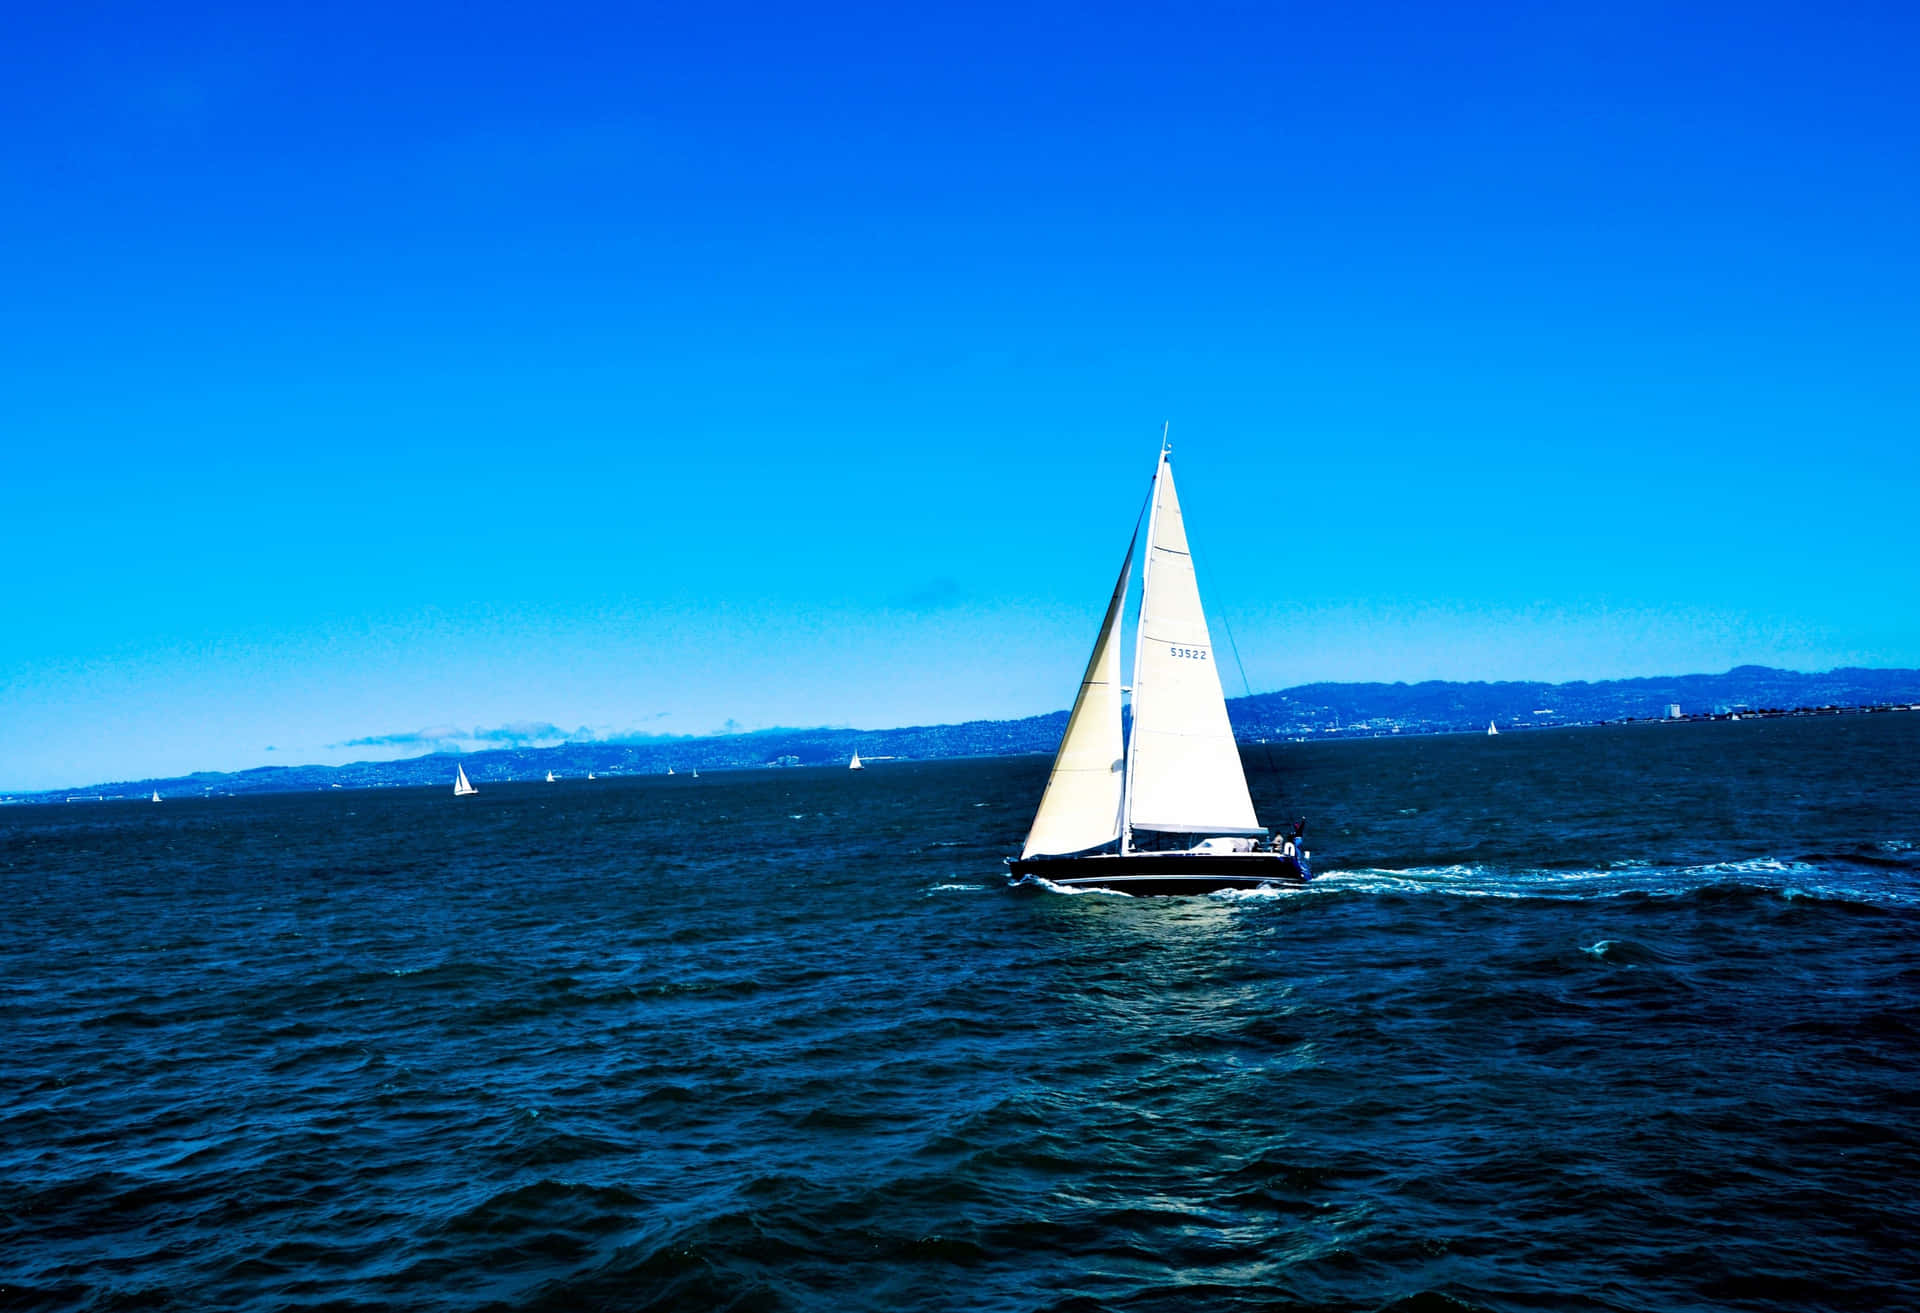 "An idyllic sailing excursion."